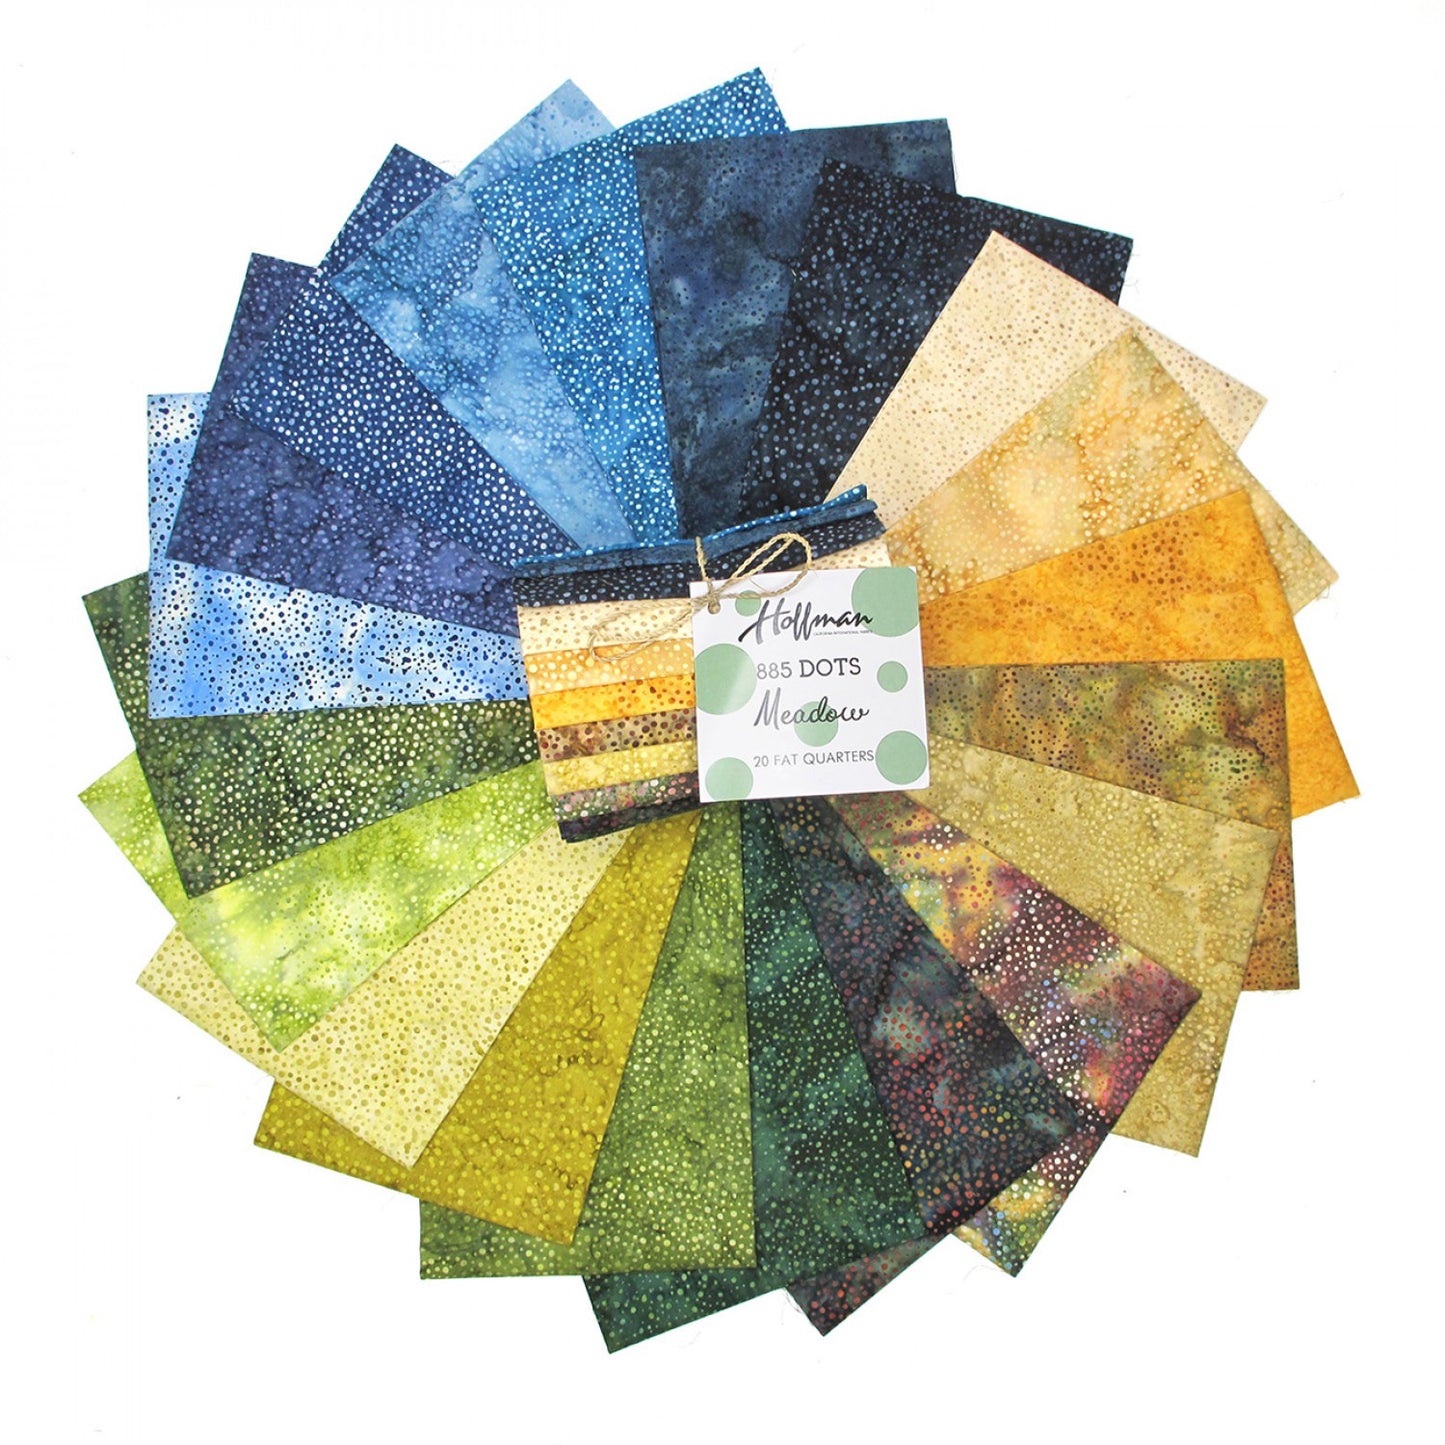 Fat Quarter Bundle - From Hoffman Fabrics 885 Bali Dot Batiks Collection - Meadow